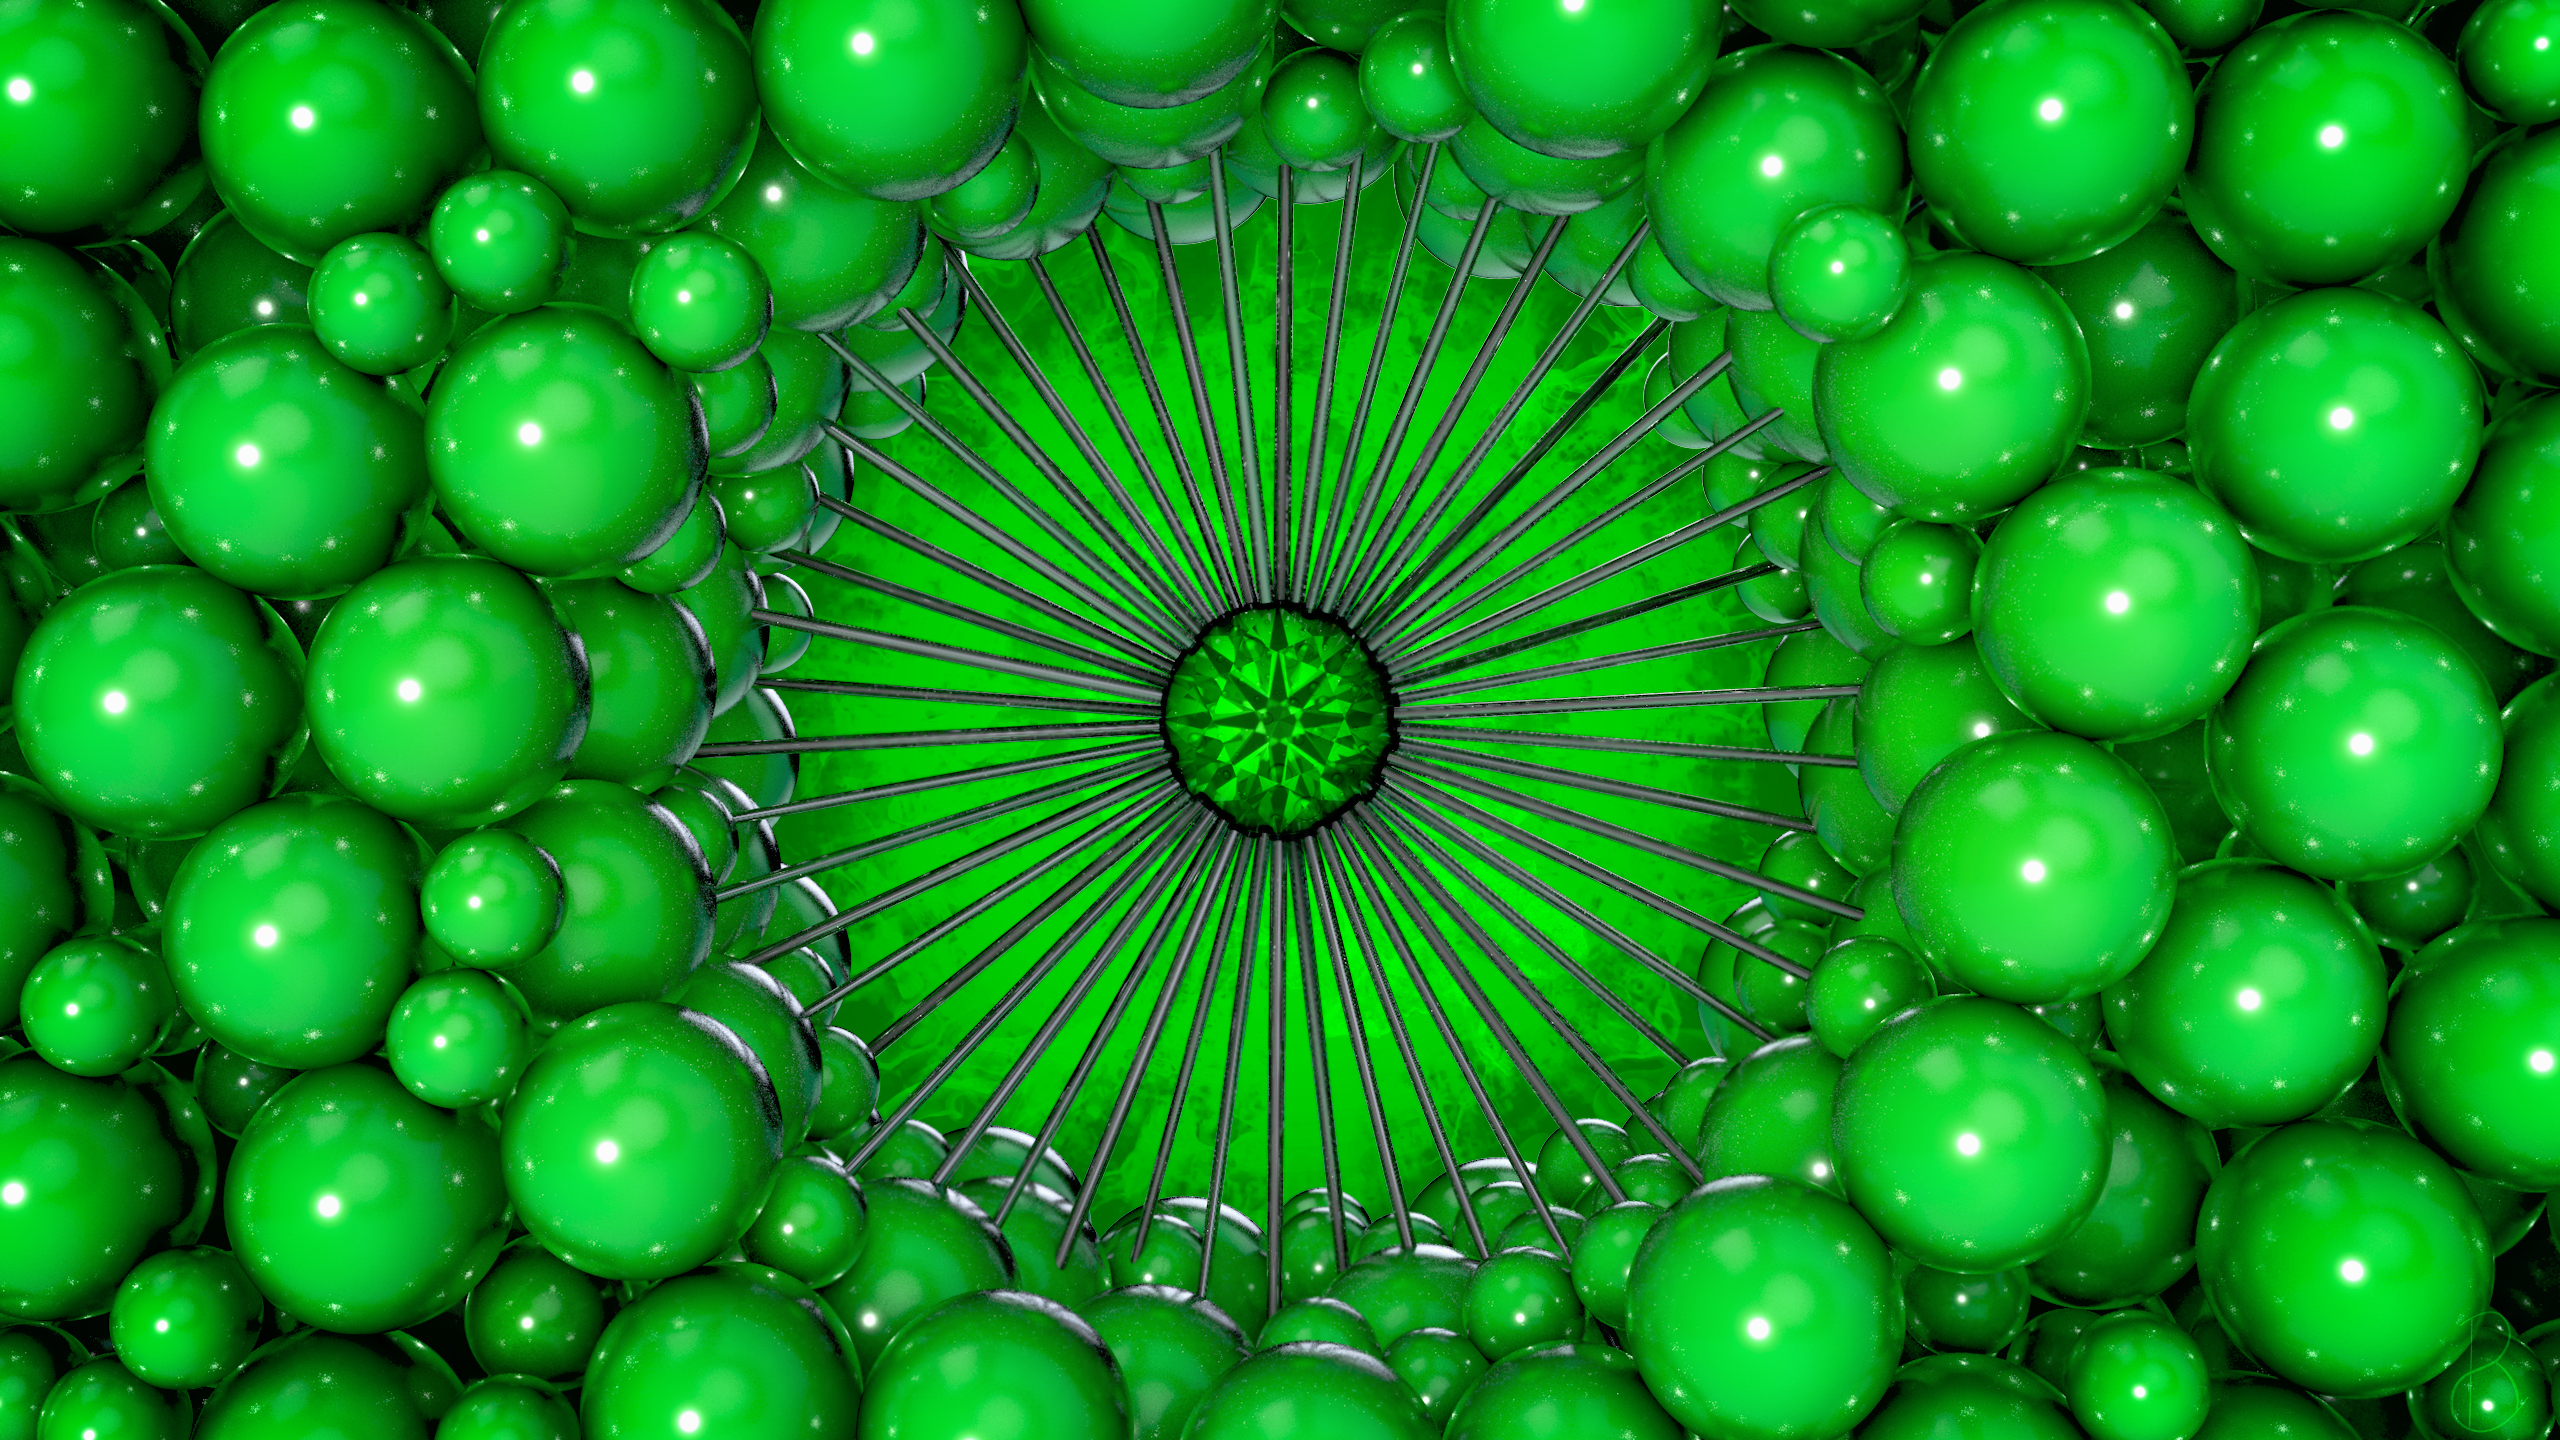 General 2560x1440 green abstract 3D fractal CGI digital art